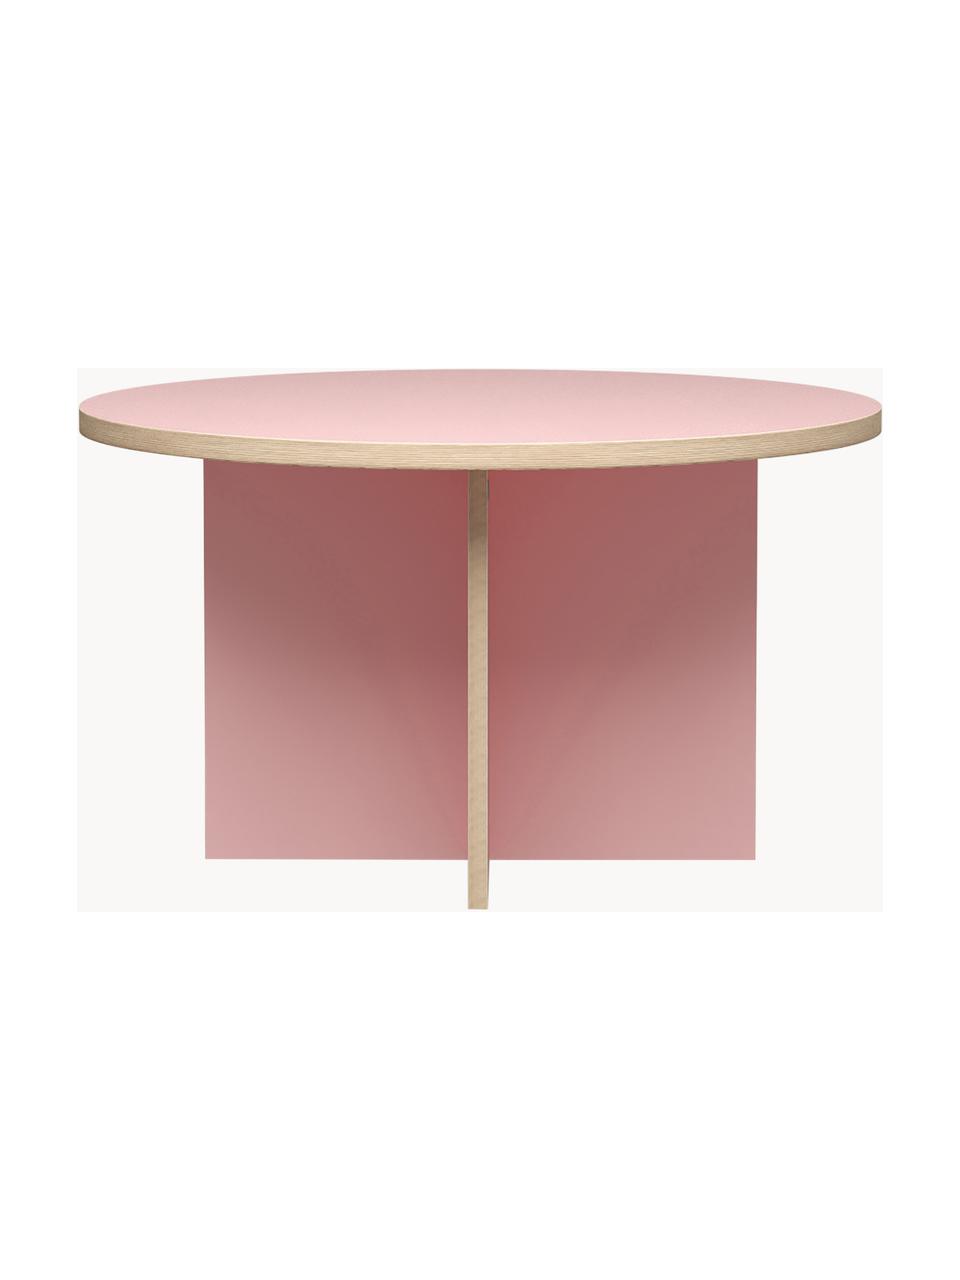 Table ronde Cirkel, Ø 129 cm, Rose, Ø 129 cm